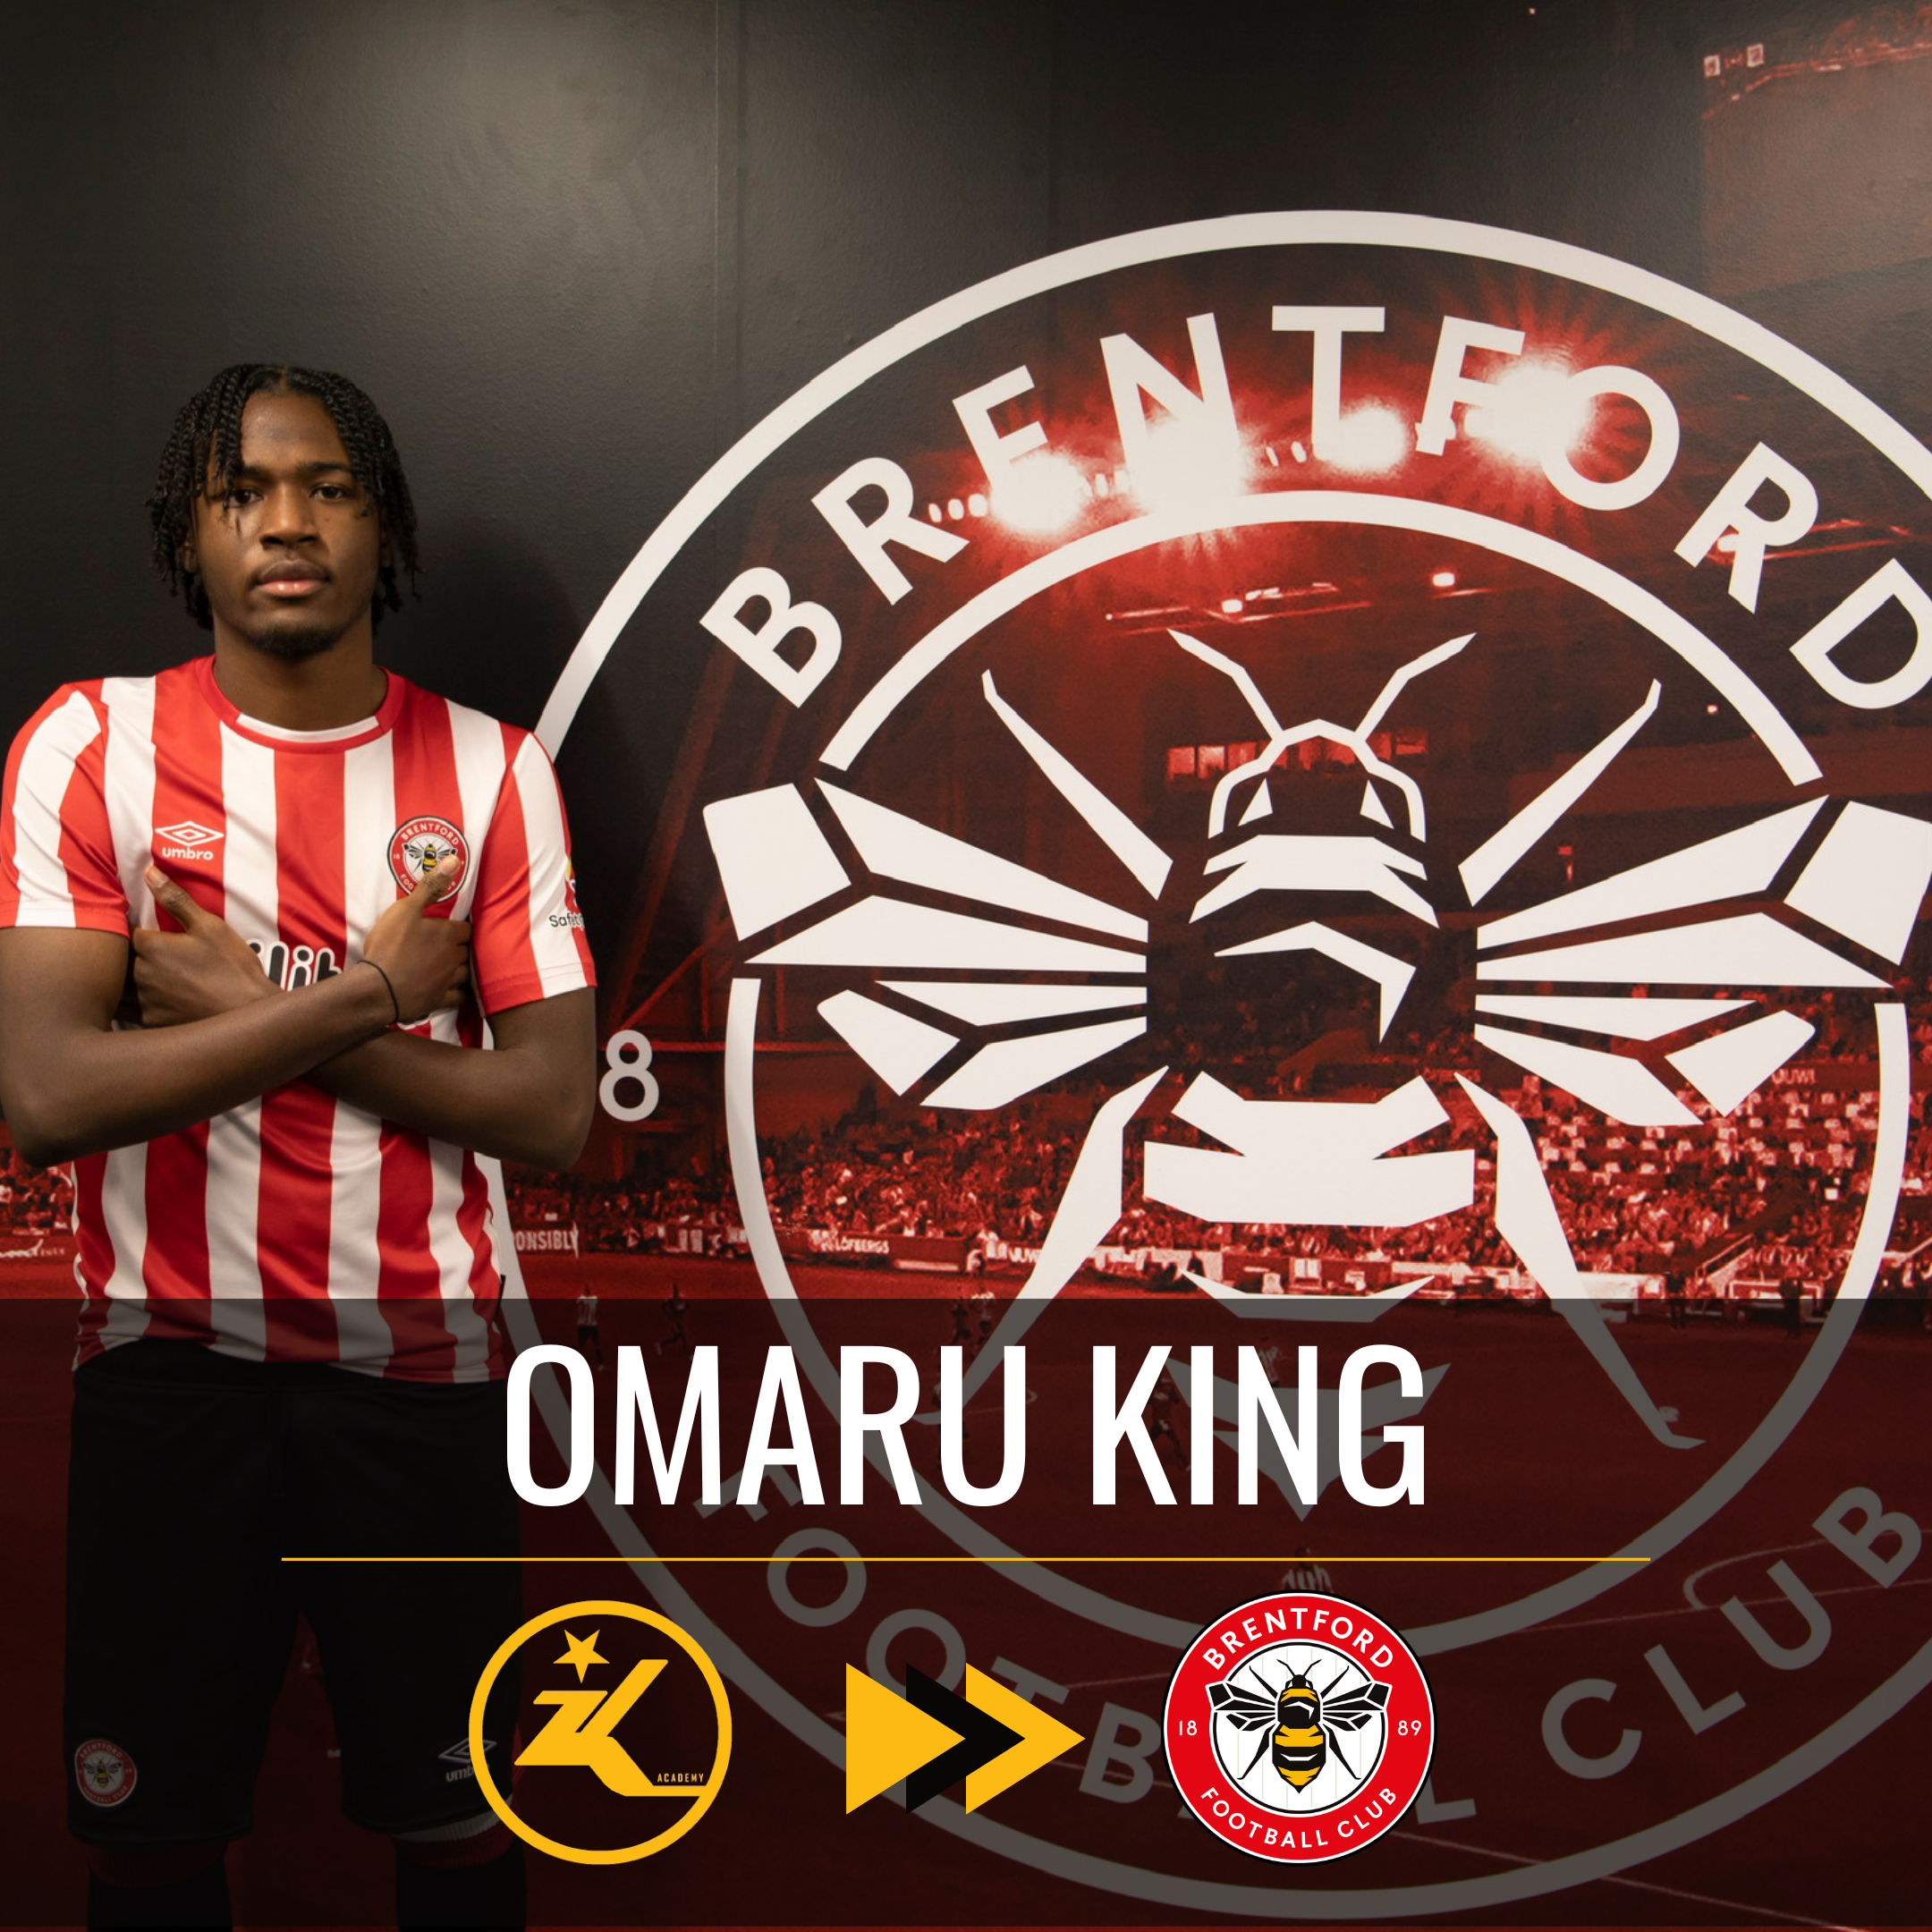 Omaru King signs for Brentford FC